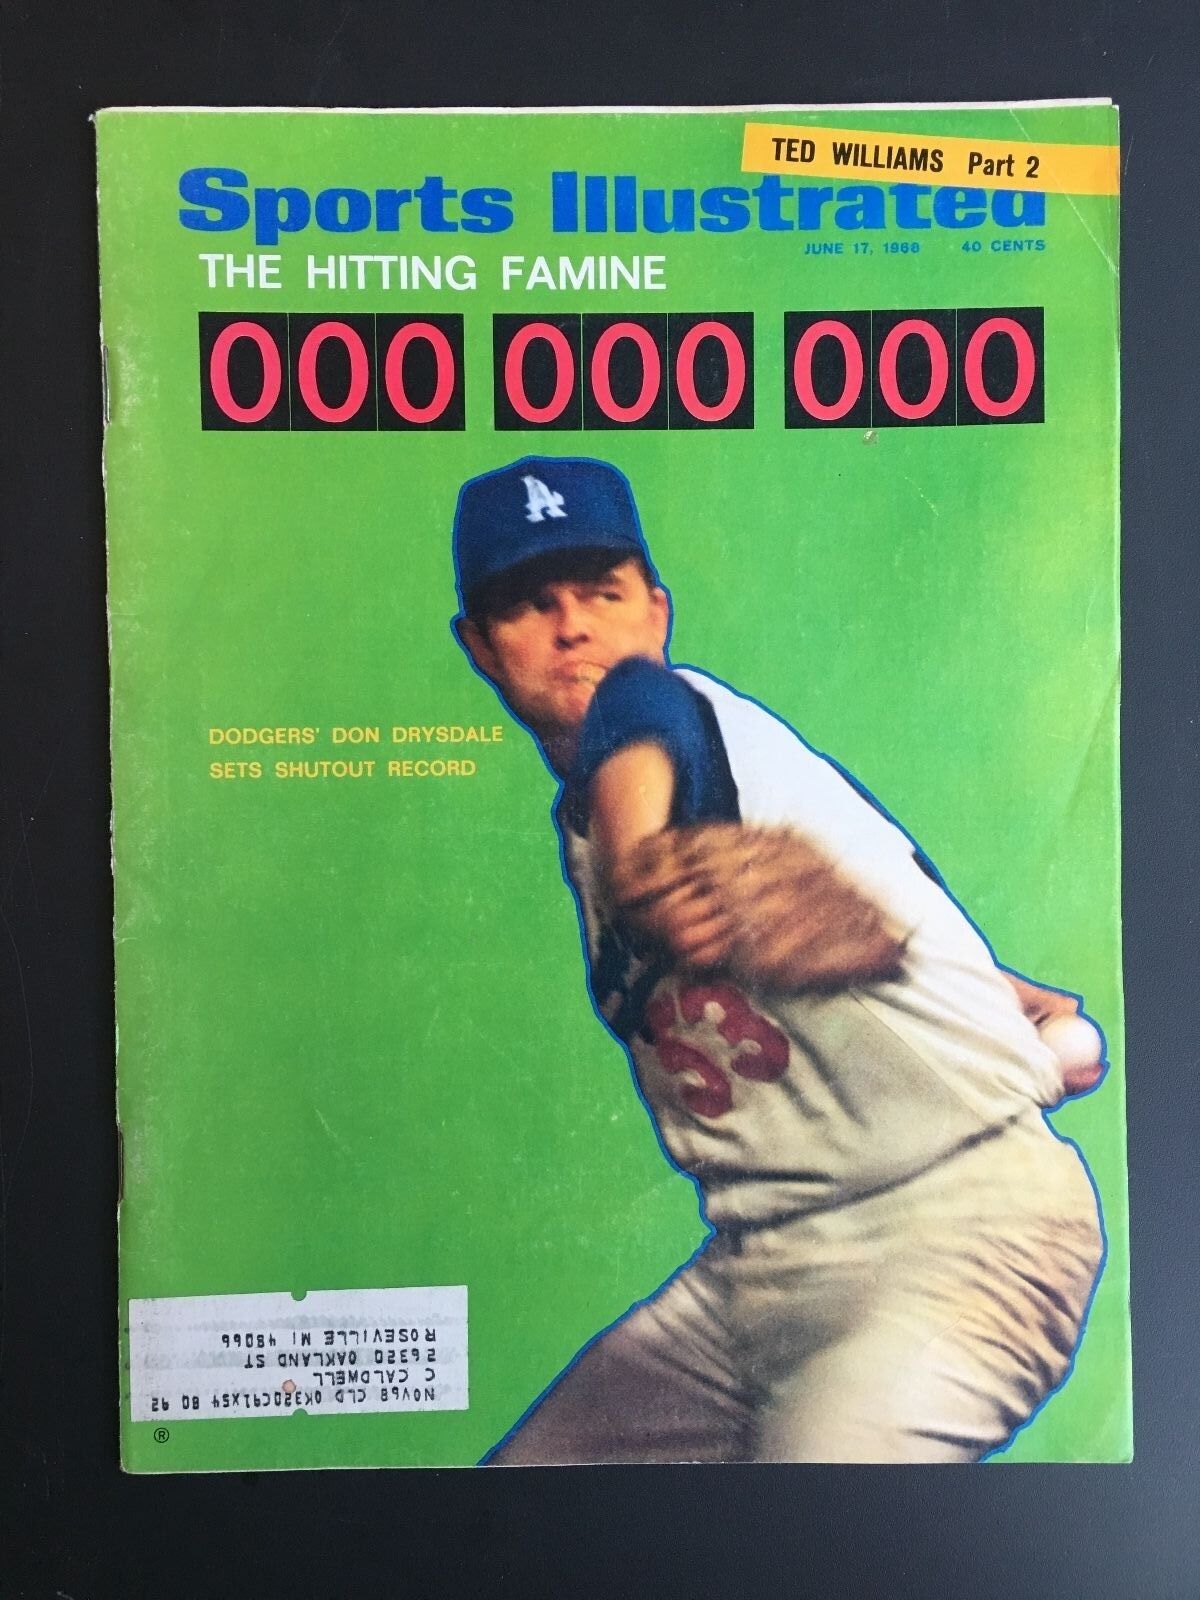 Sports Illustrated Magazine June 17,1968 Issue Original Ted Williams Part 2